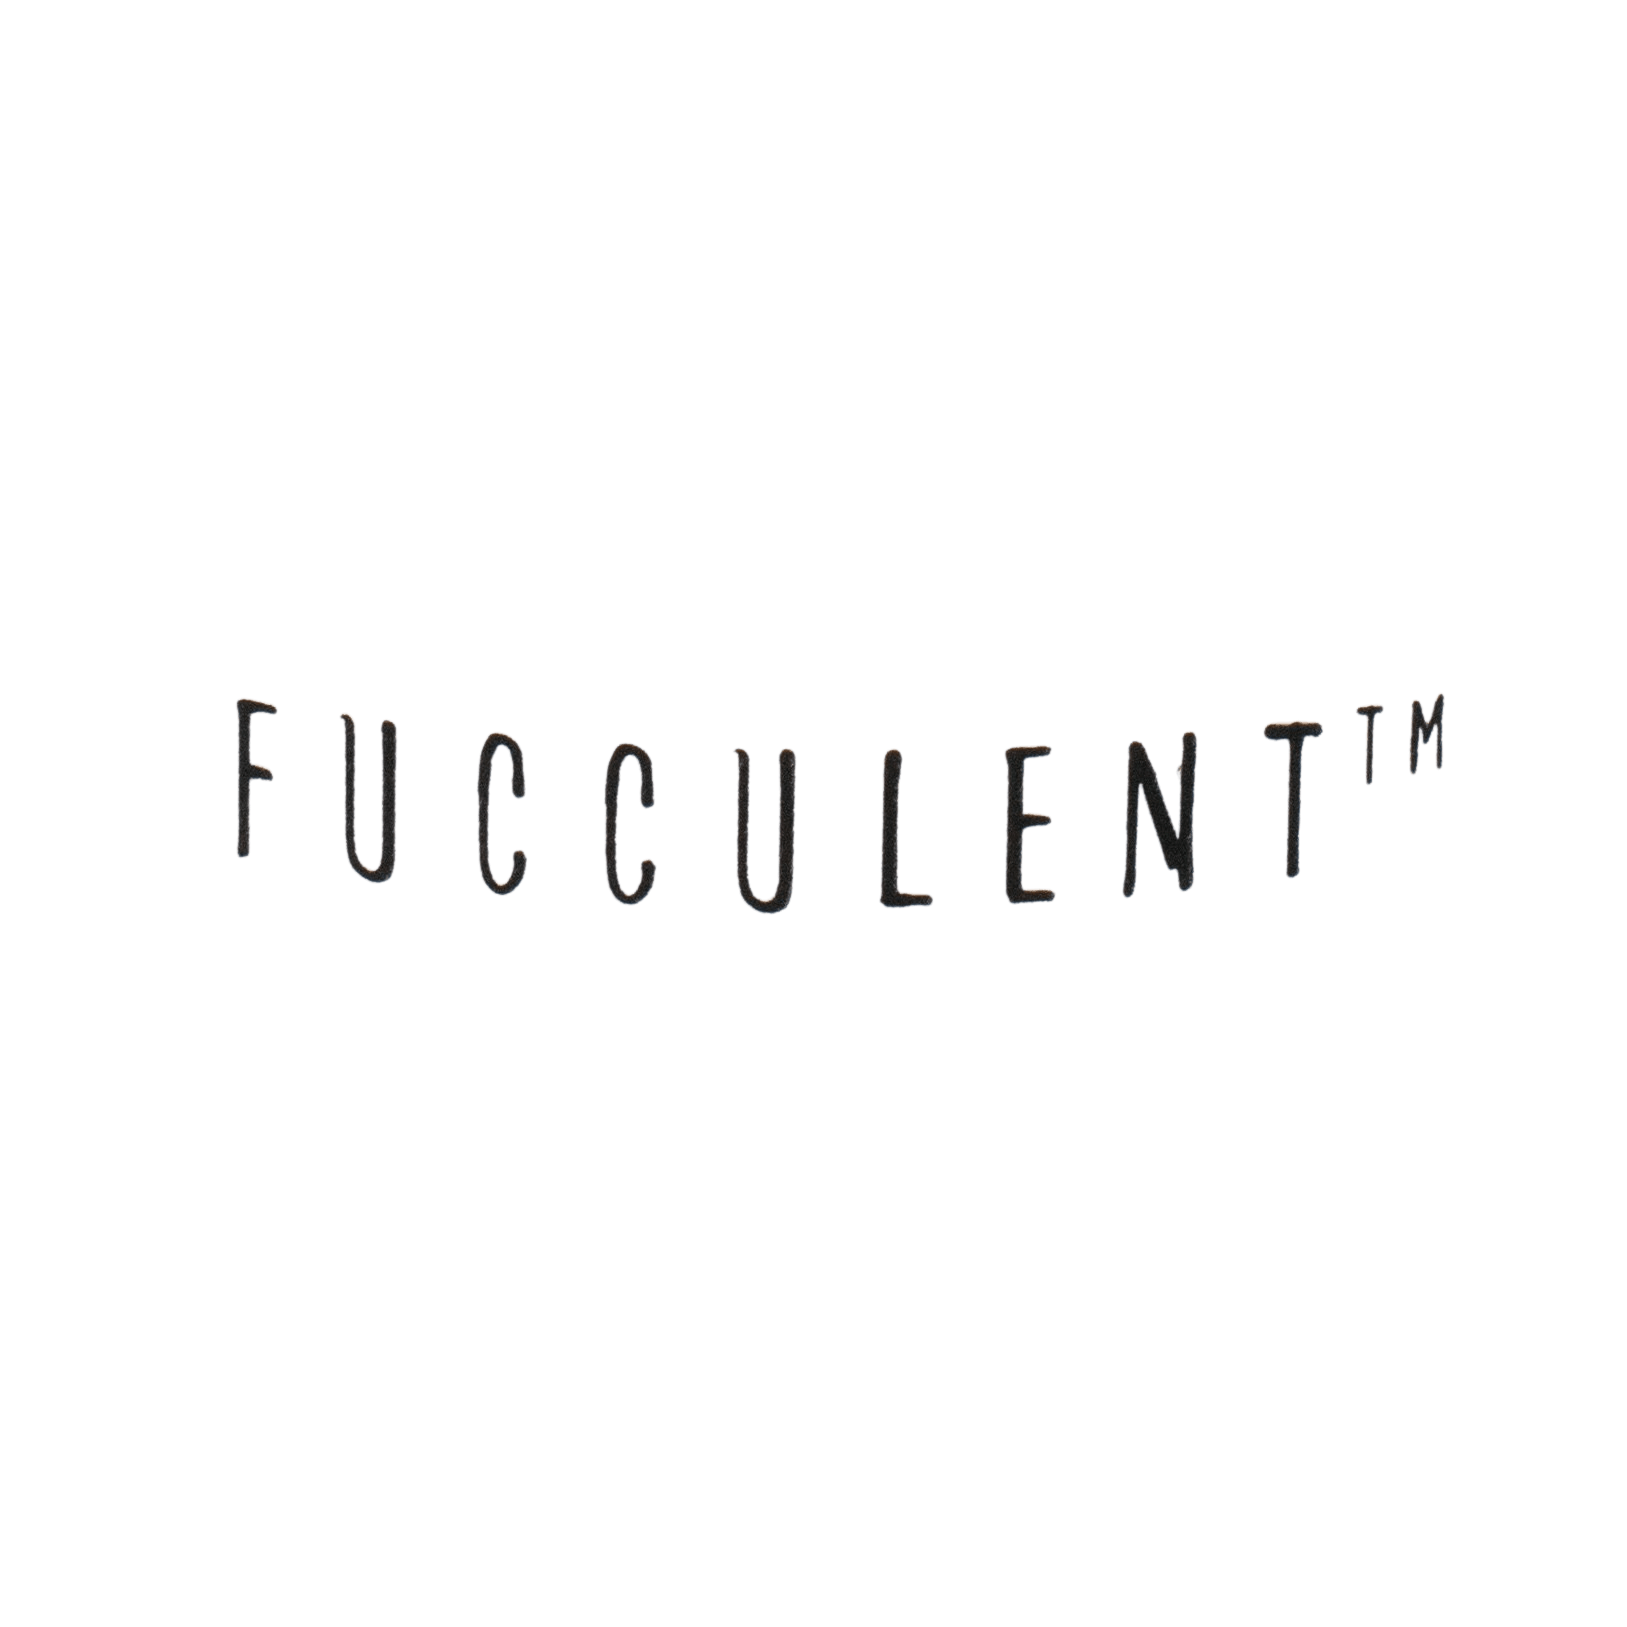 Fucculent Logo